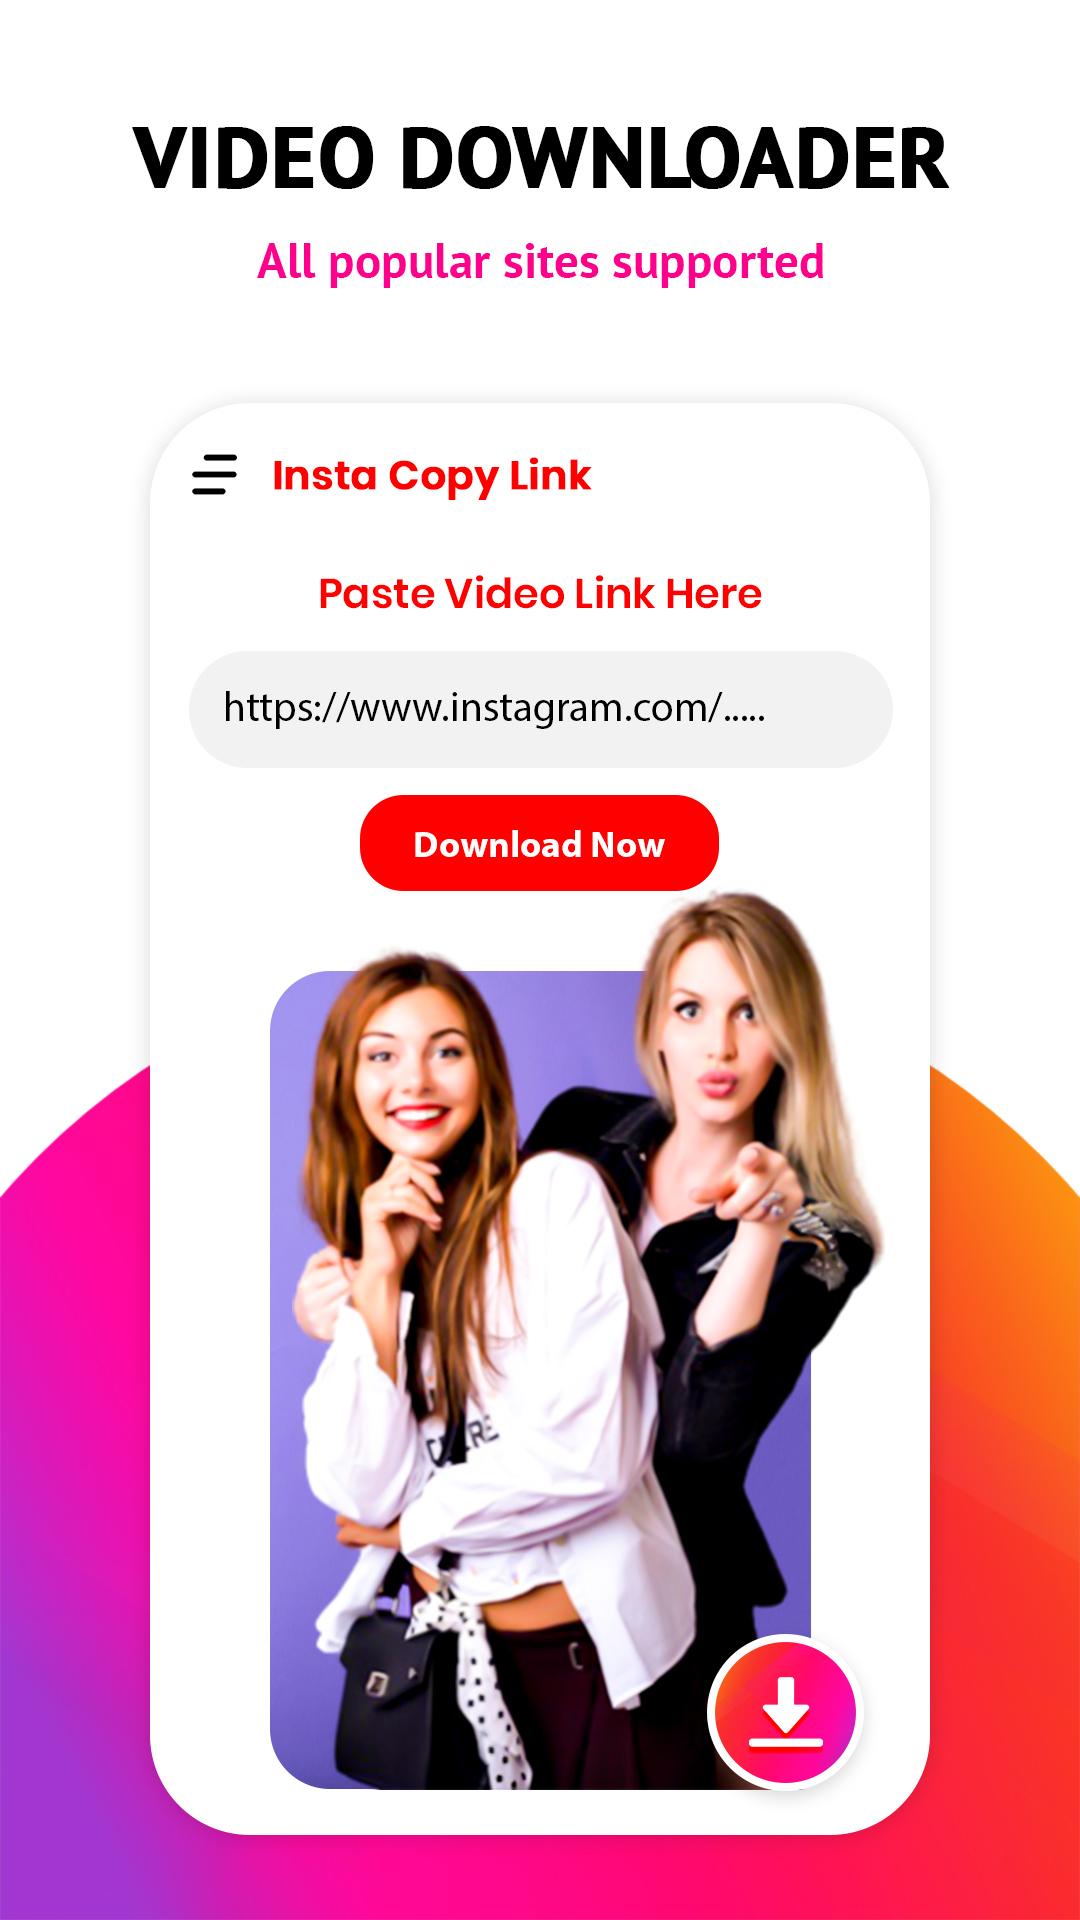 Free Video Downloader - XN Video Downloader 1.2 Screenshot 2